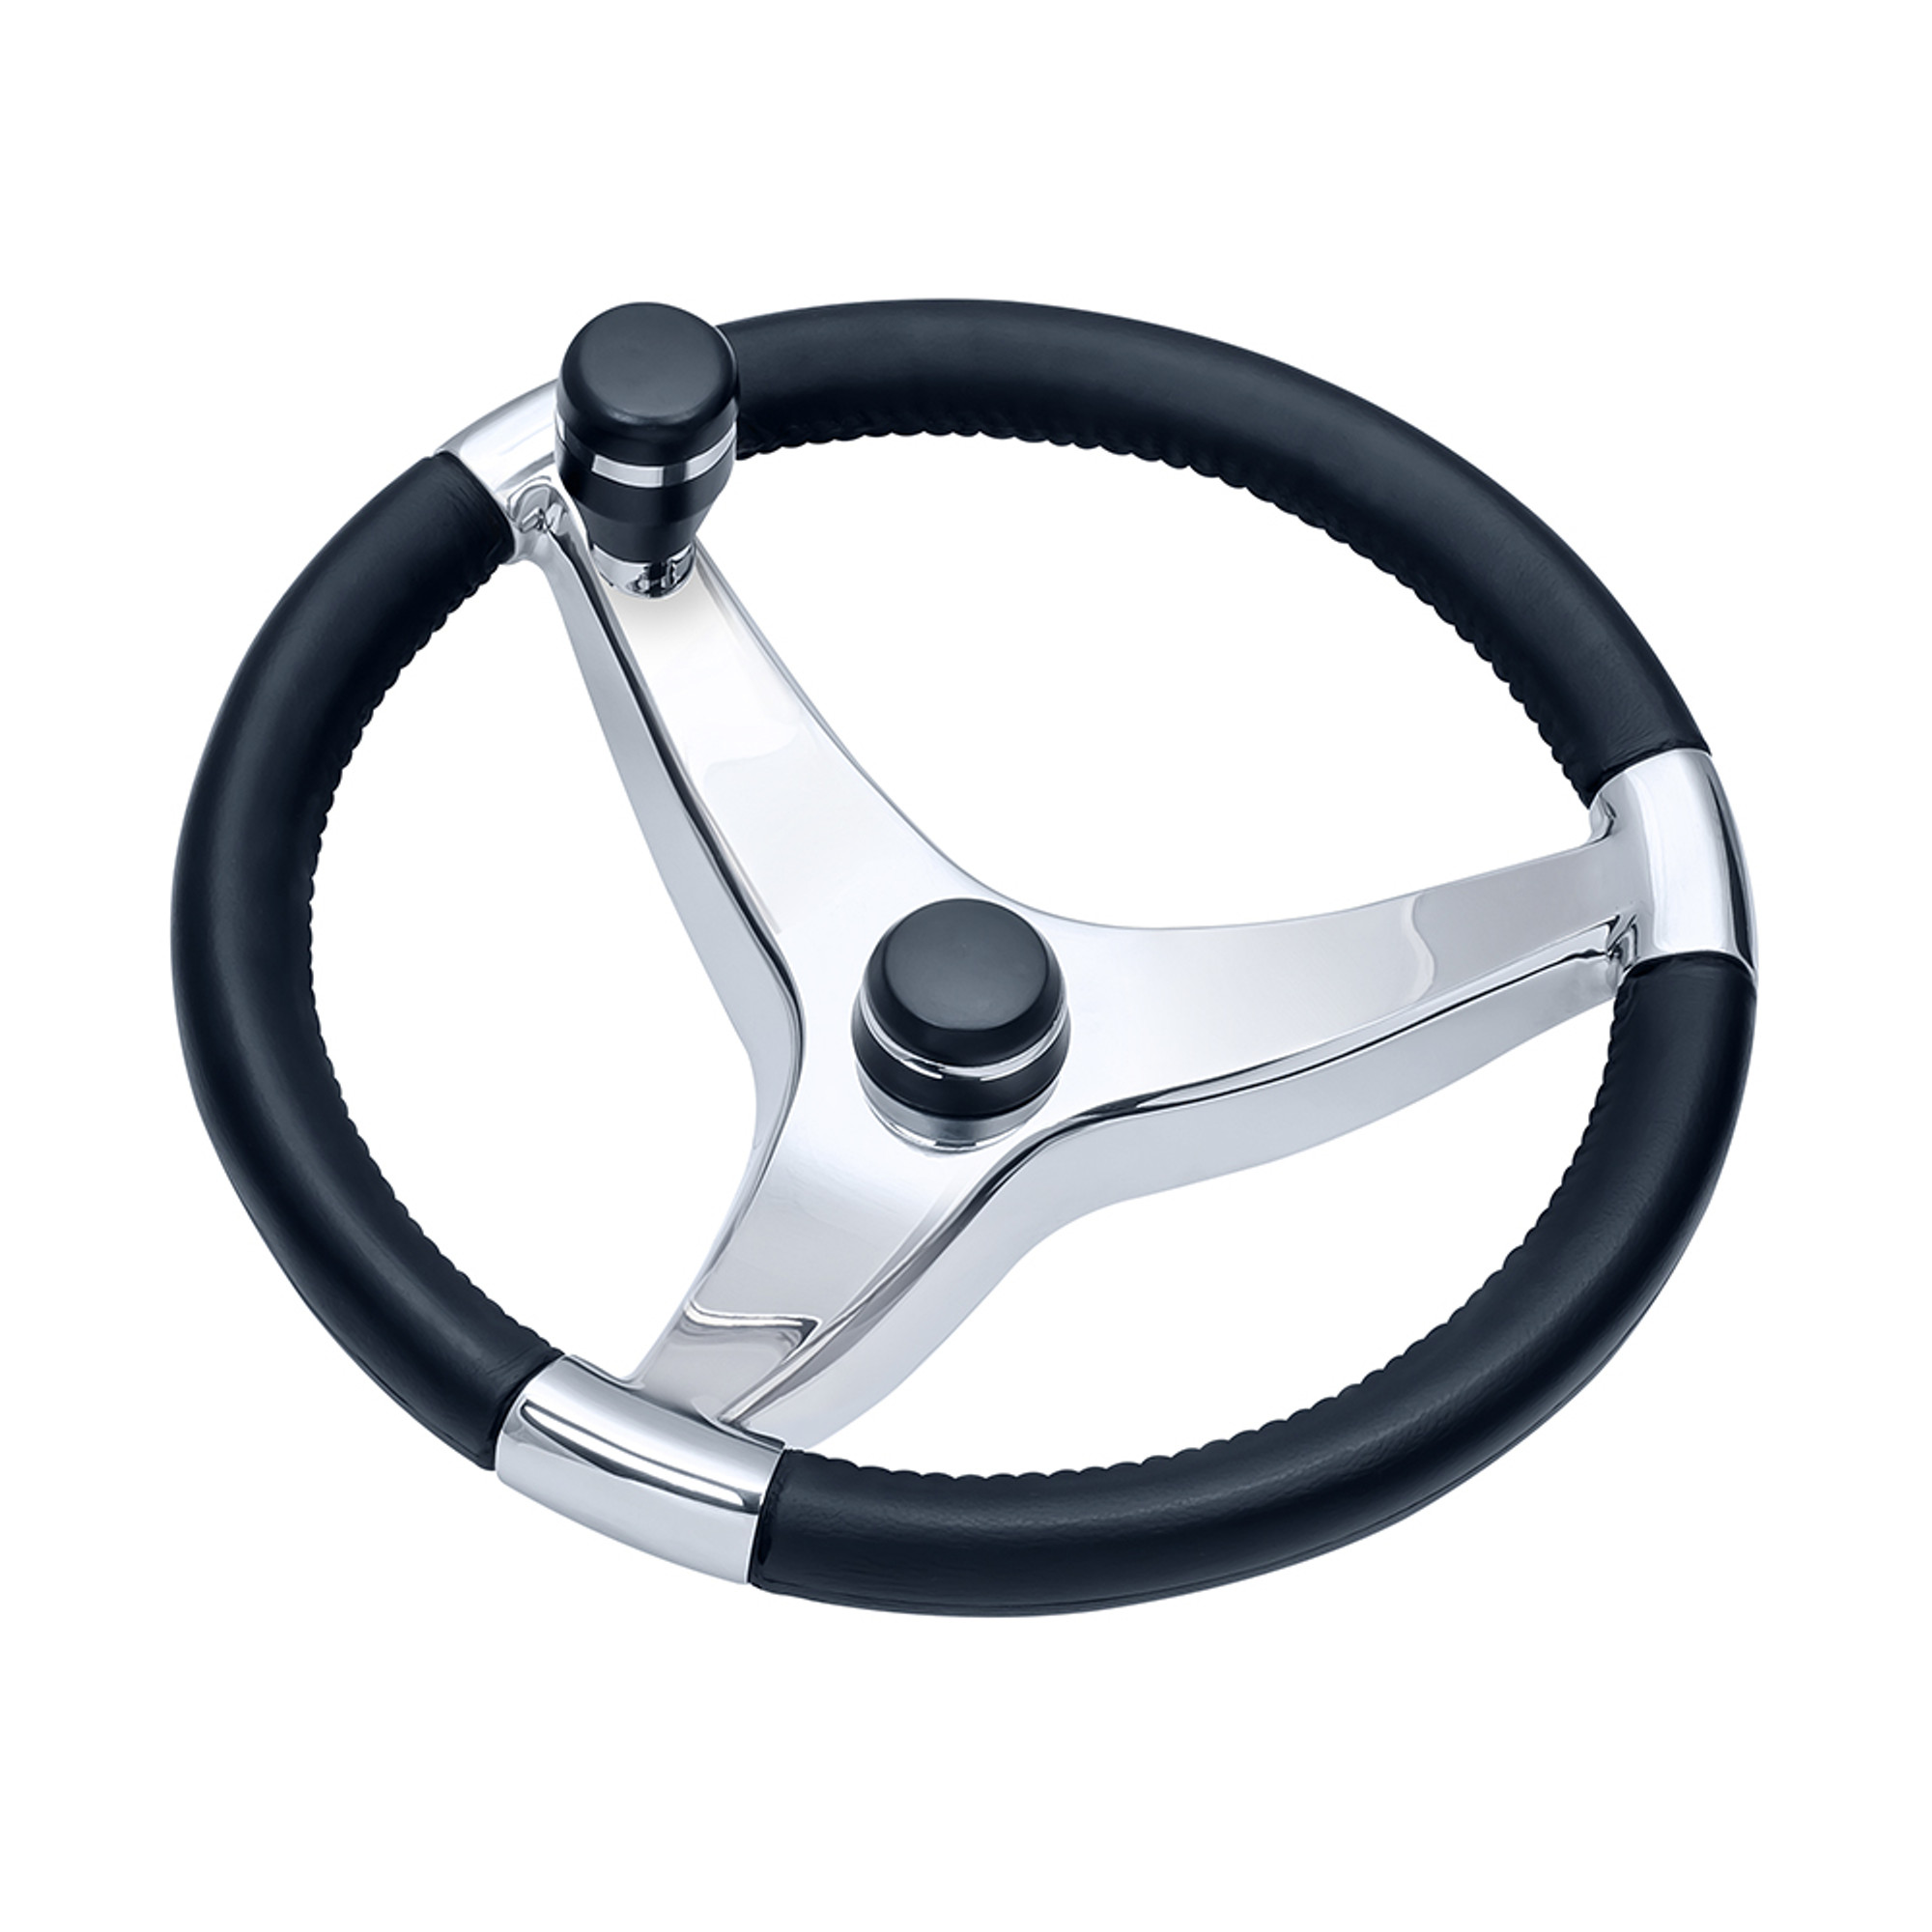 Schmitt Marine Evo Pro 316 Cast Stainless Steel Steering Wheel w/Control Knob - 15.5" Diameter